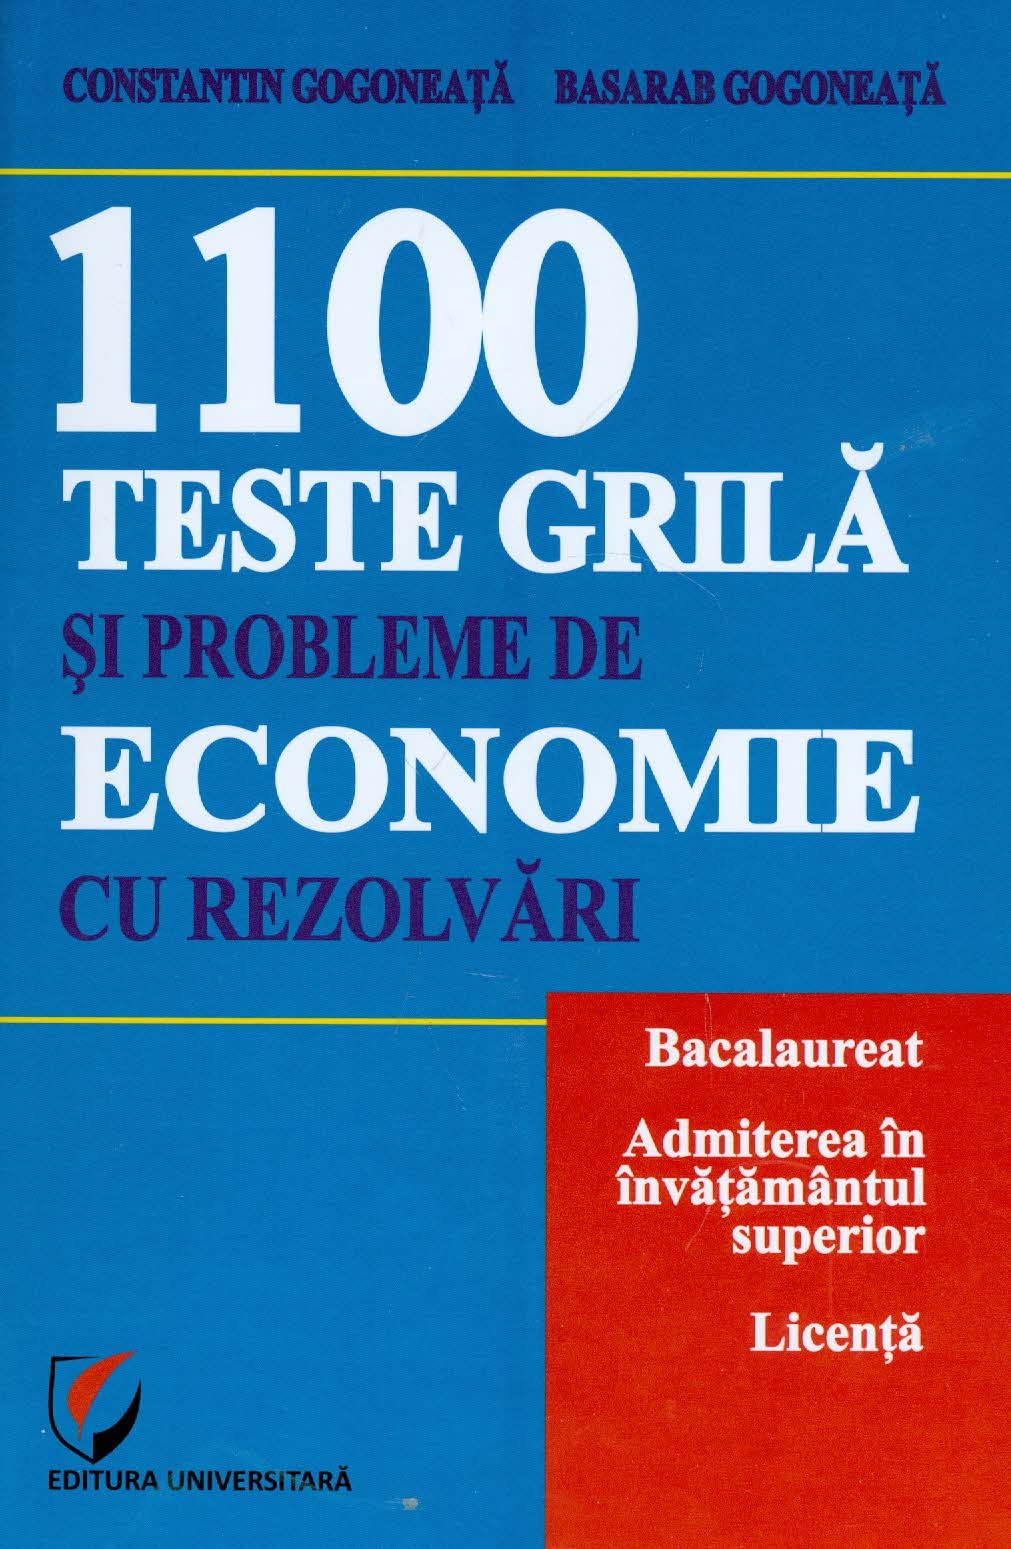 1100 teste grila si probleme de economie cu rezolvari - Constatin Gogoneata